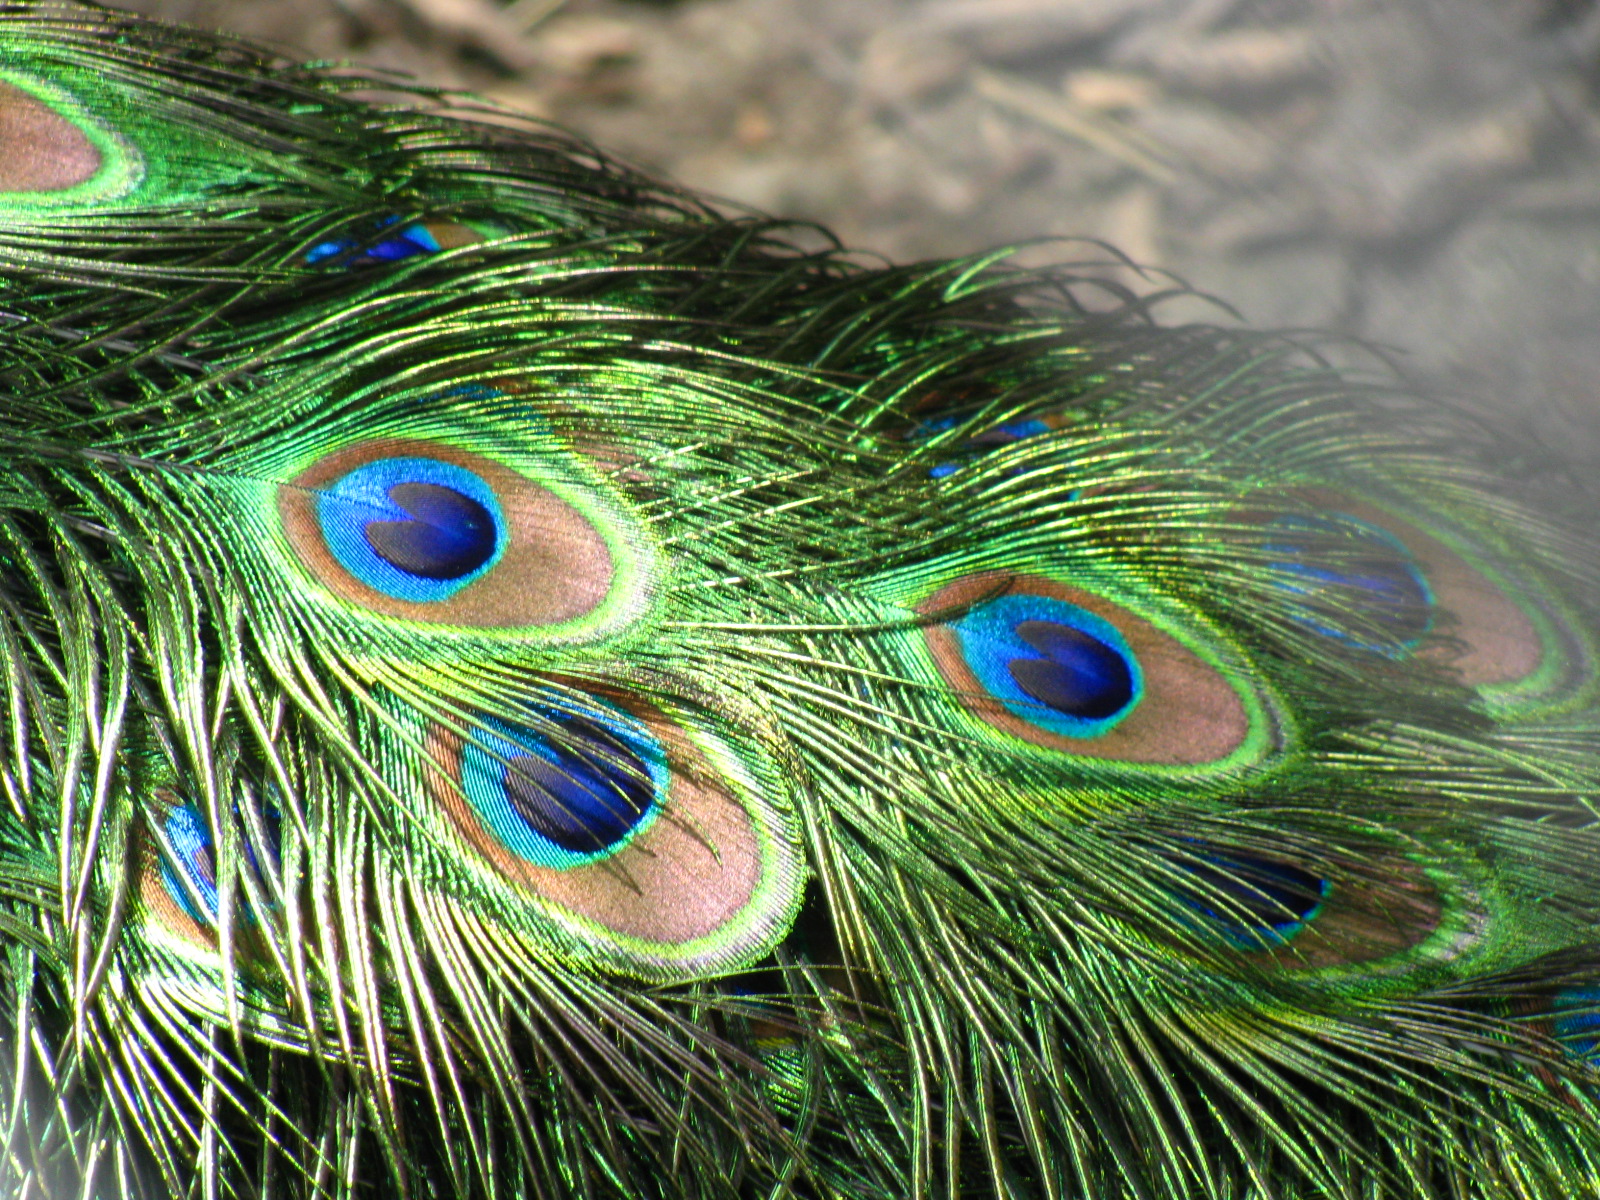 File:Peacock feathers closeup.jpg - Wikimedia Commons